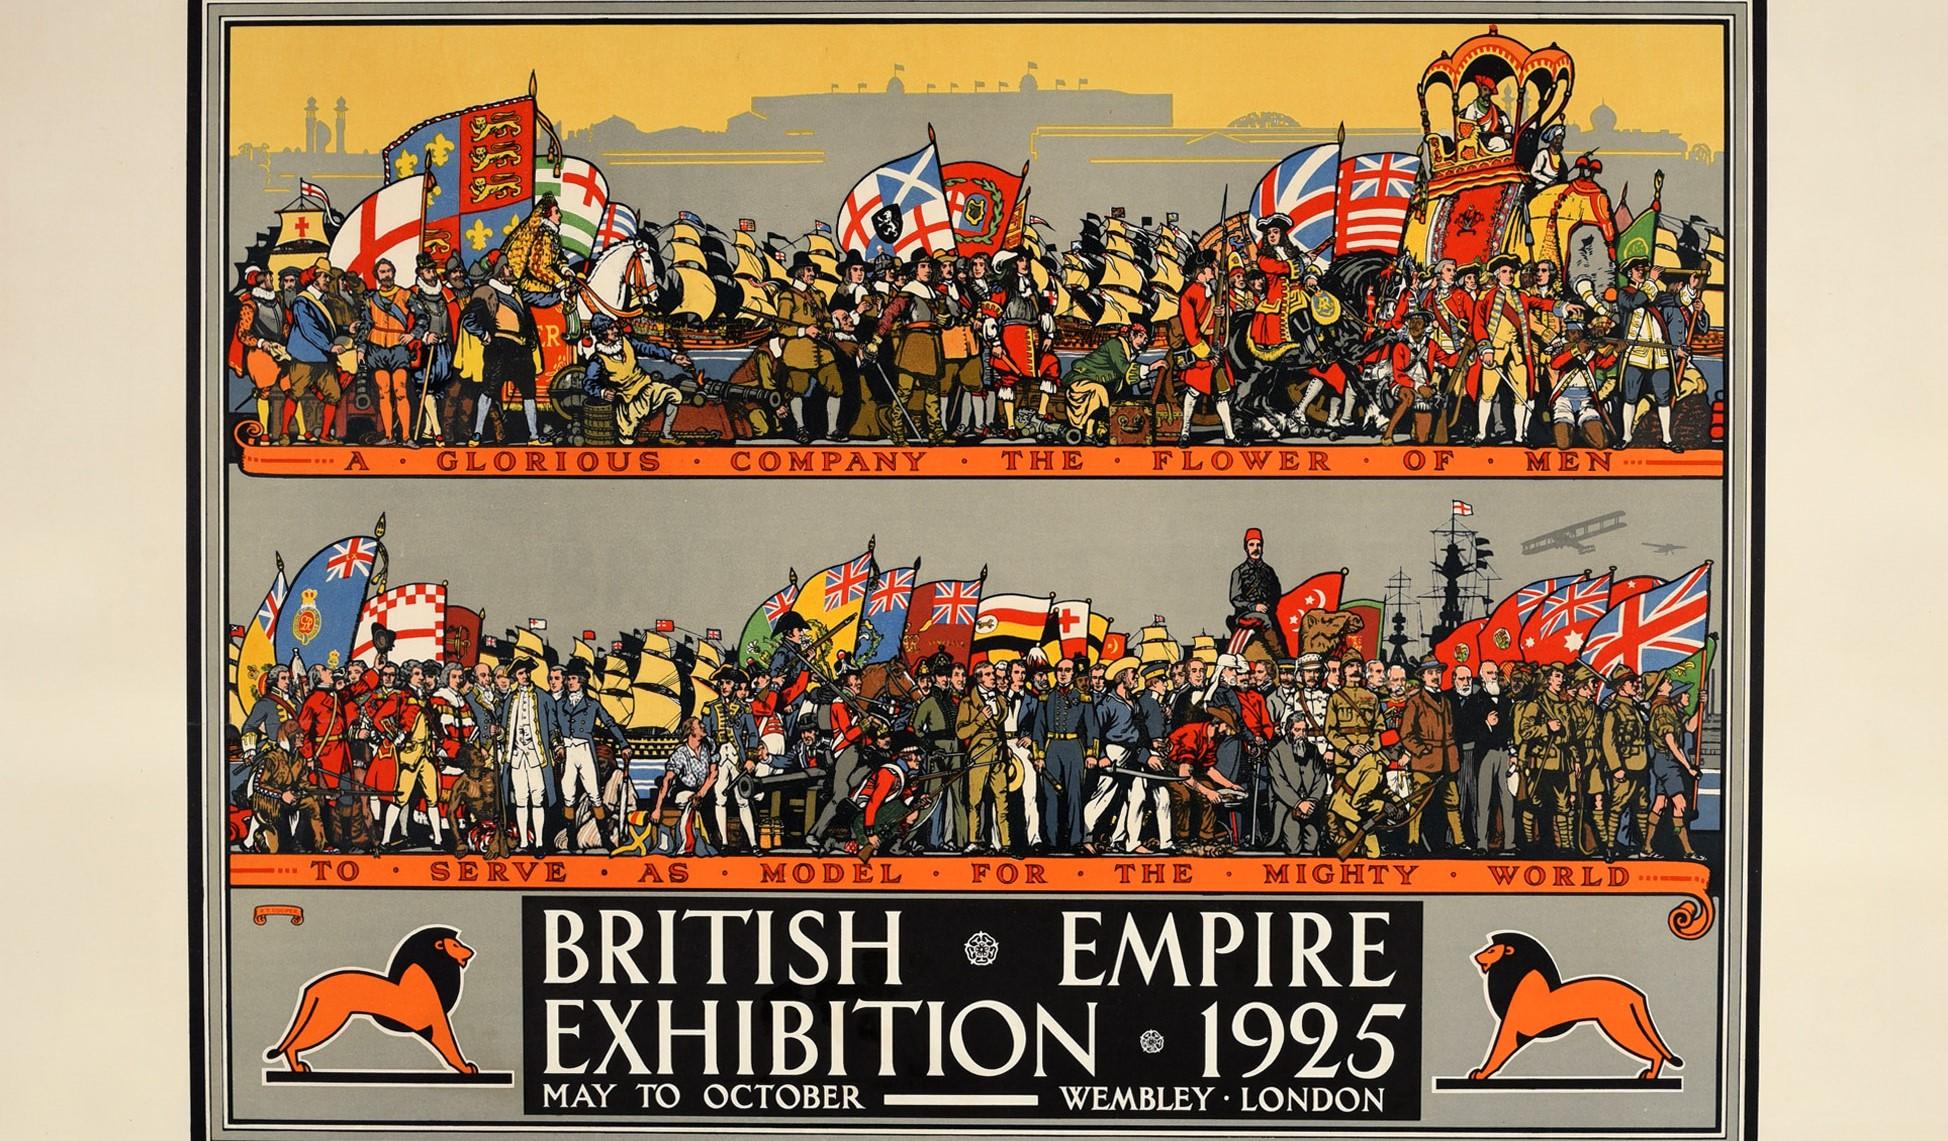 Original Vintage Poster British Empire Exhibition 1925 Wembley London World Tour - Print by R. T. Cooper